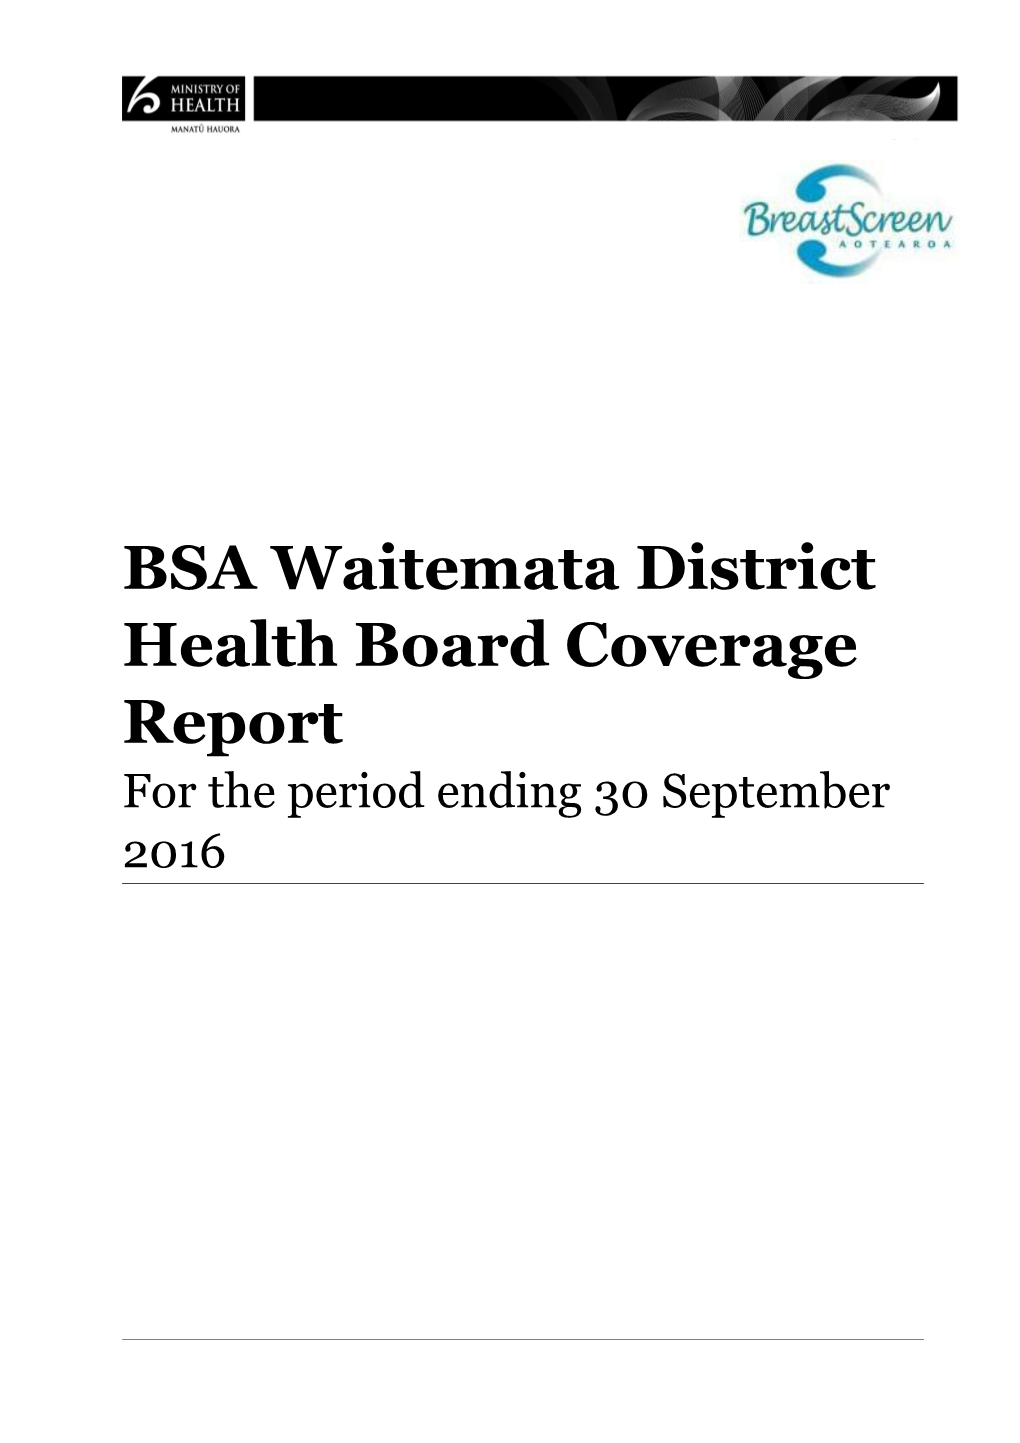 Bsawaitematadistrict Health Boardcoverage Report